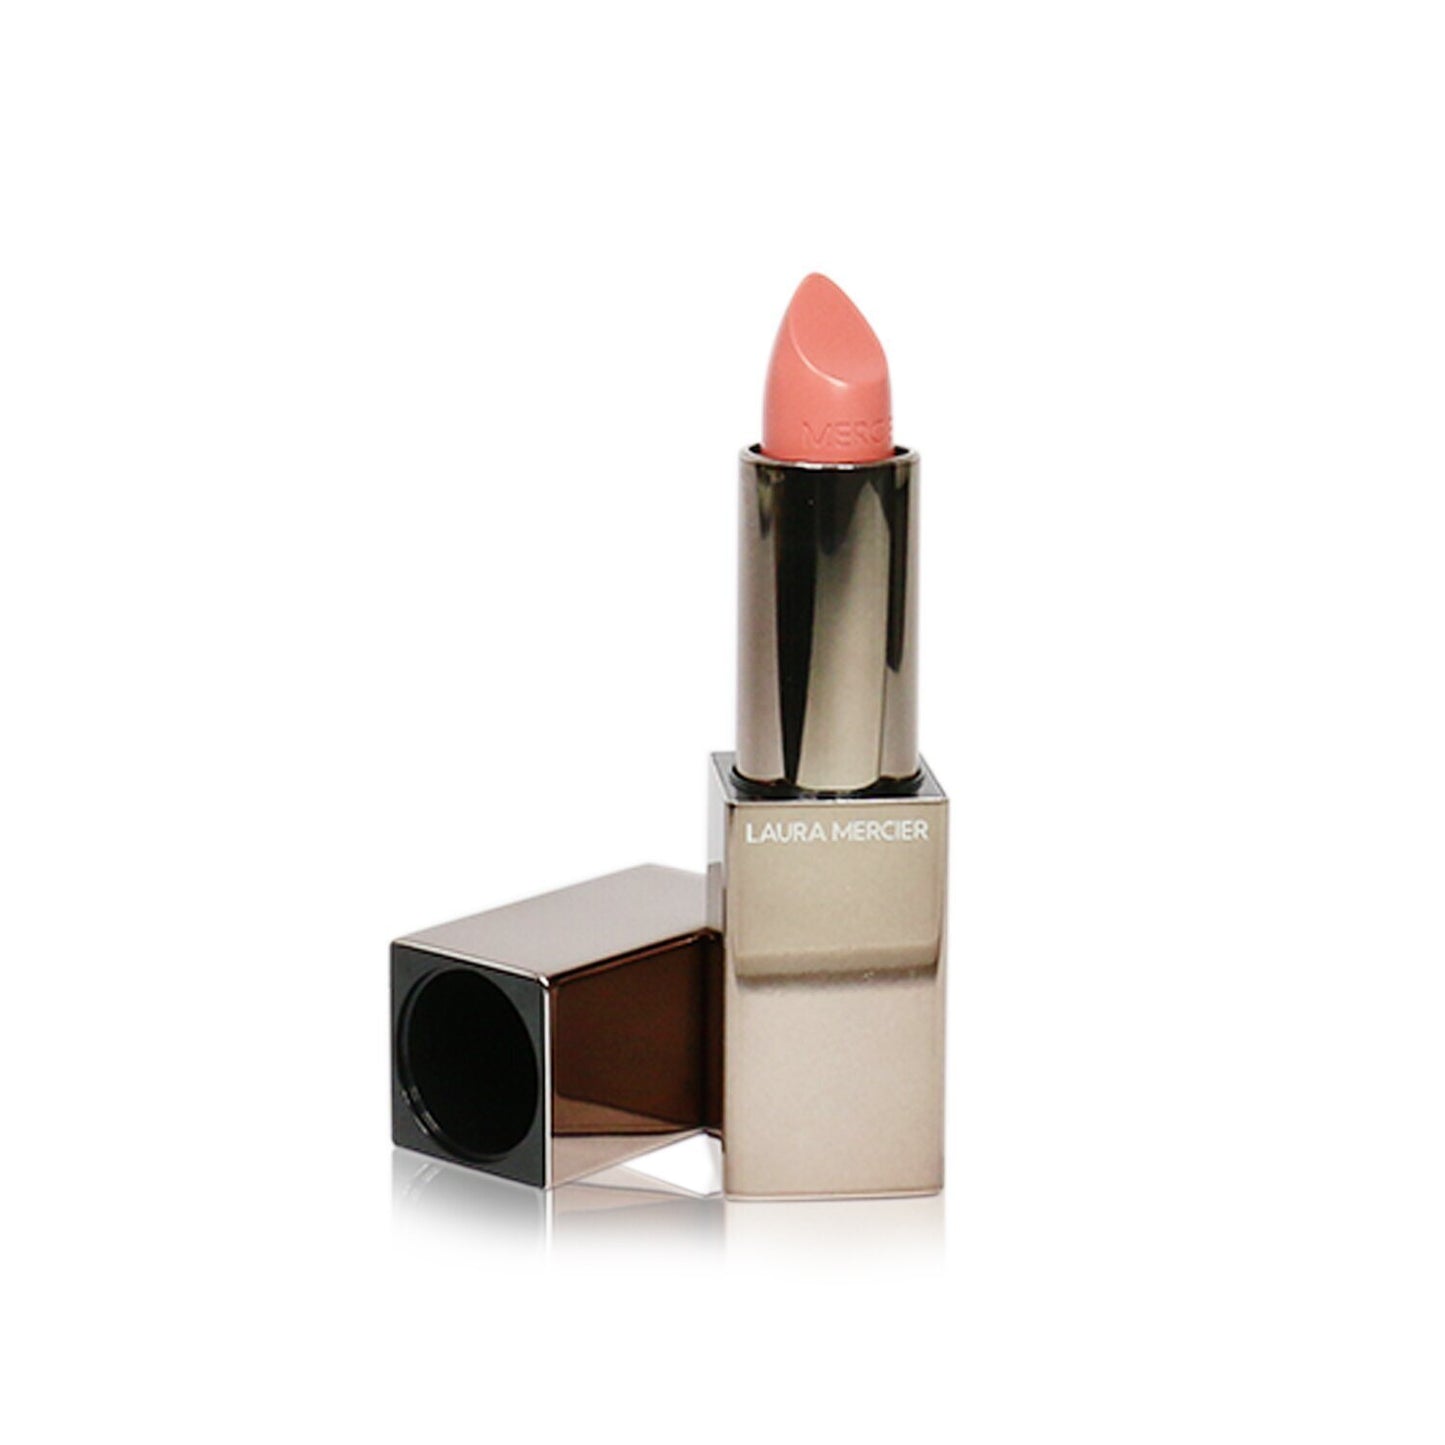 LAURA MERCIER - Rouge Essentiel Silky Creme Lipstick - # Nude Noveau (Nude Pink Brown) 12704668 3.5g/0.12oz